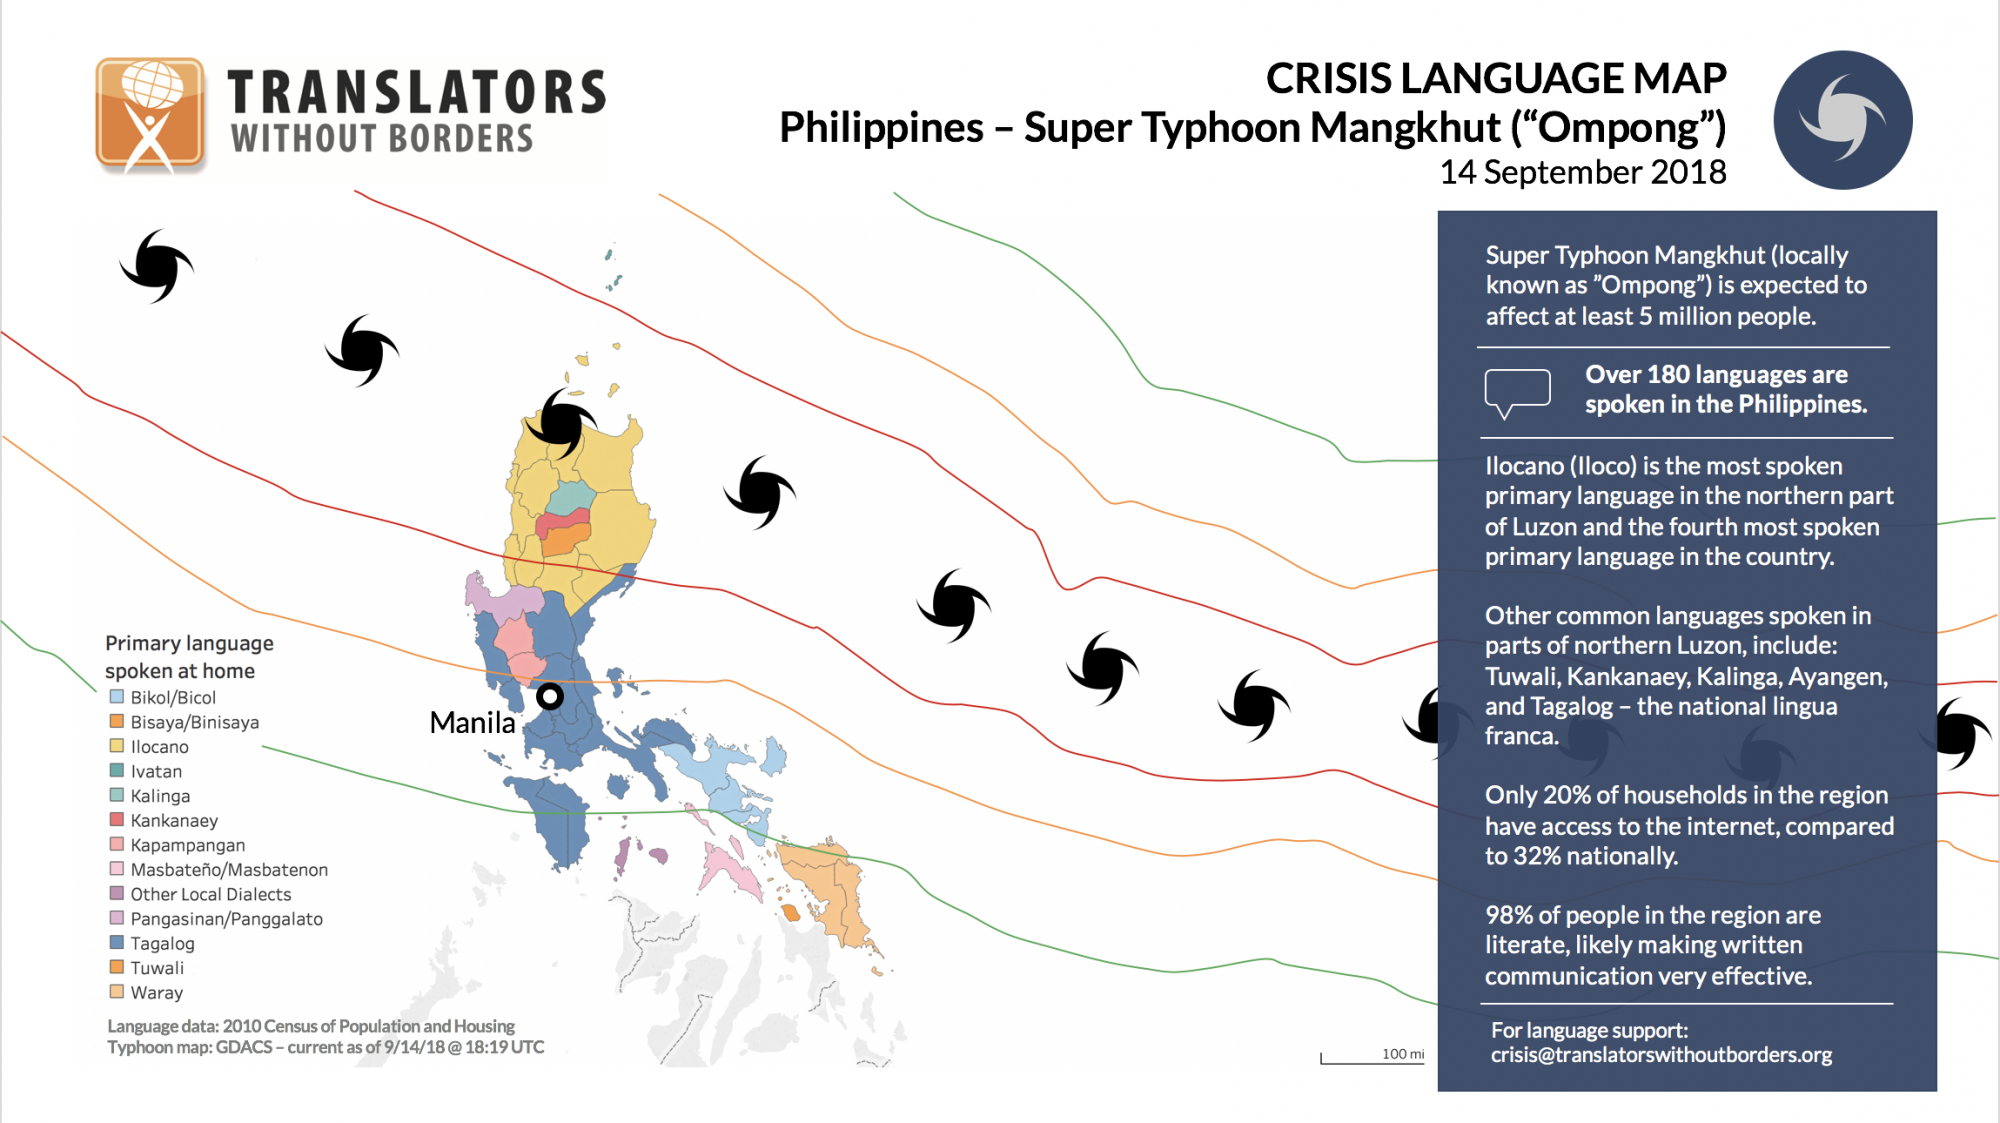 Philippines Super Typhoon Mangkhut (“Ompong”) – Crisis language map